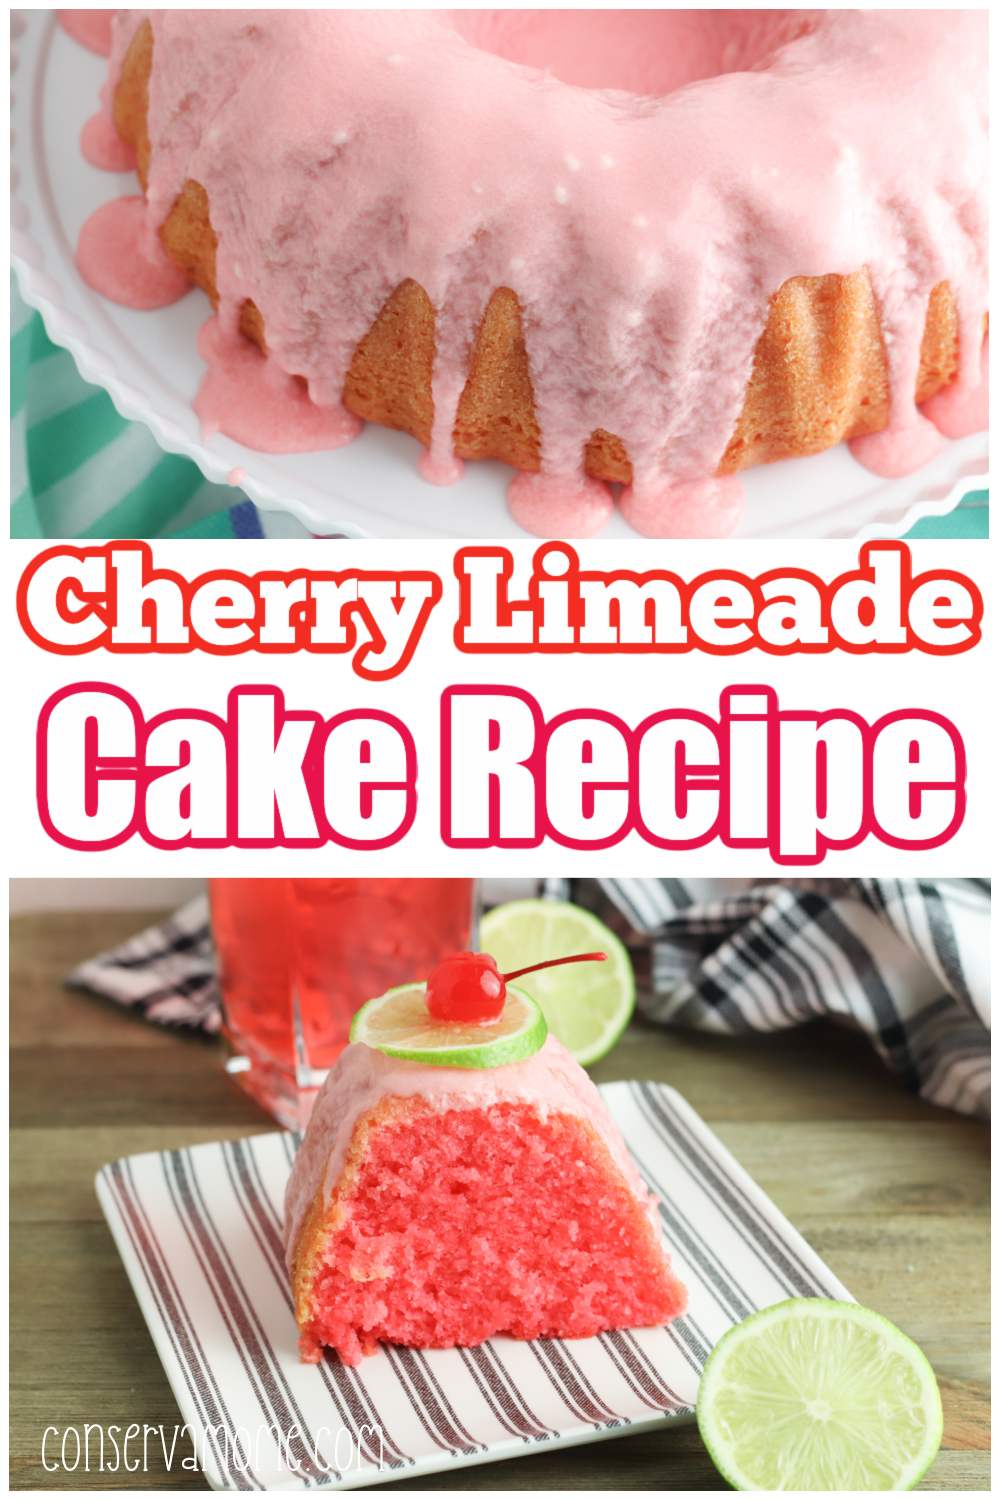 Cherry limeade cake recipe